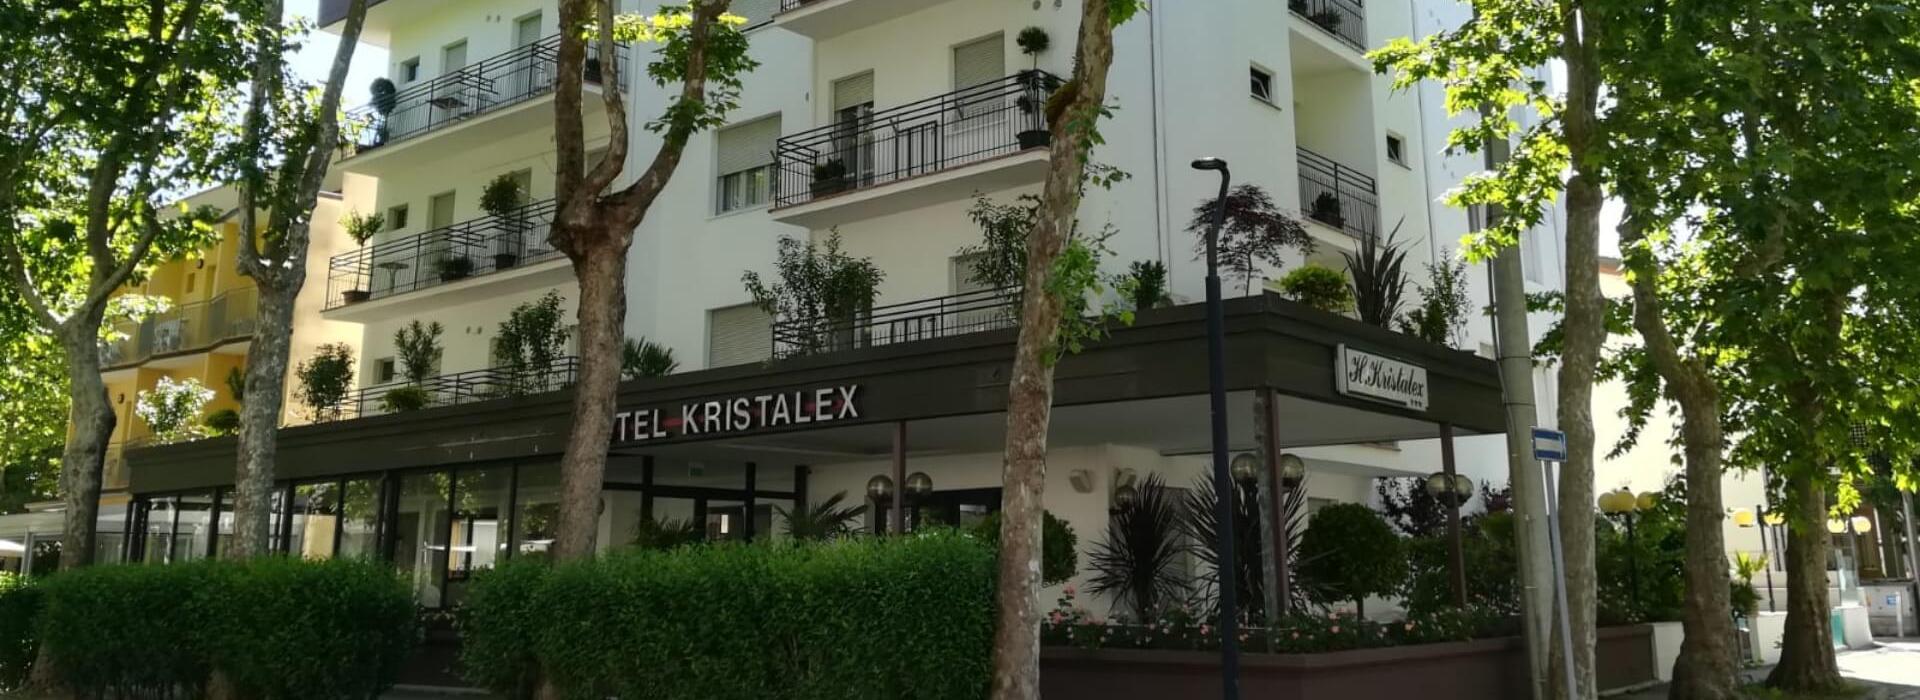 hotelkristalex fr offre-avec-beach-box-gratis-a-l-hotel-pet-friendly-a-cesenatico 017